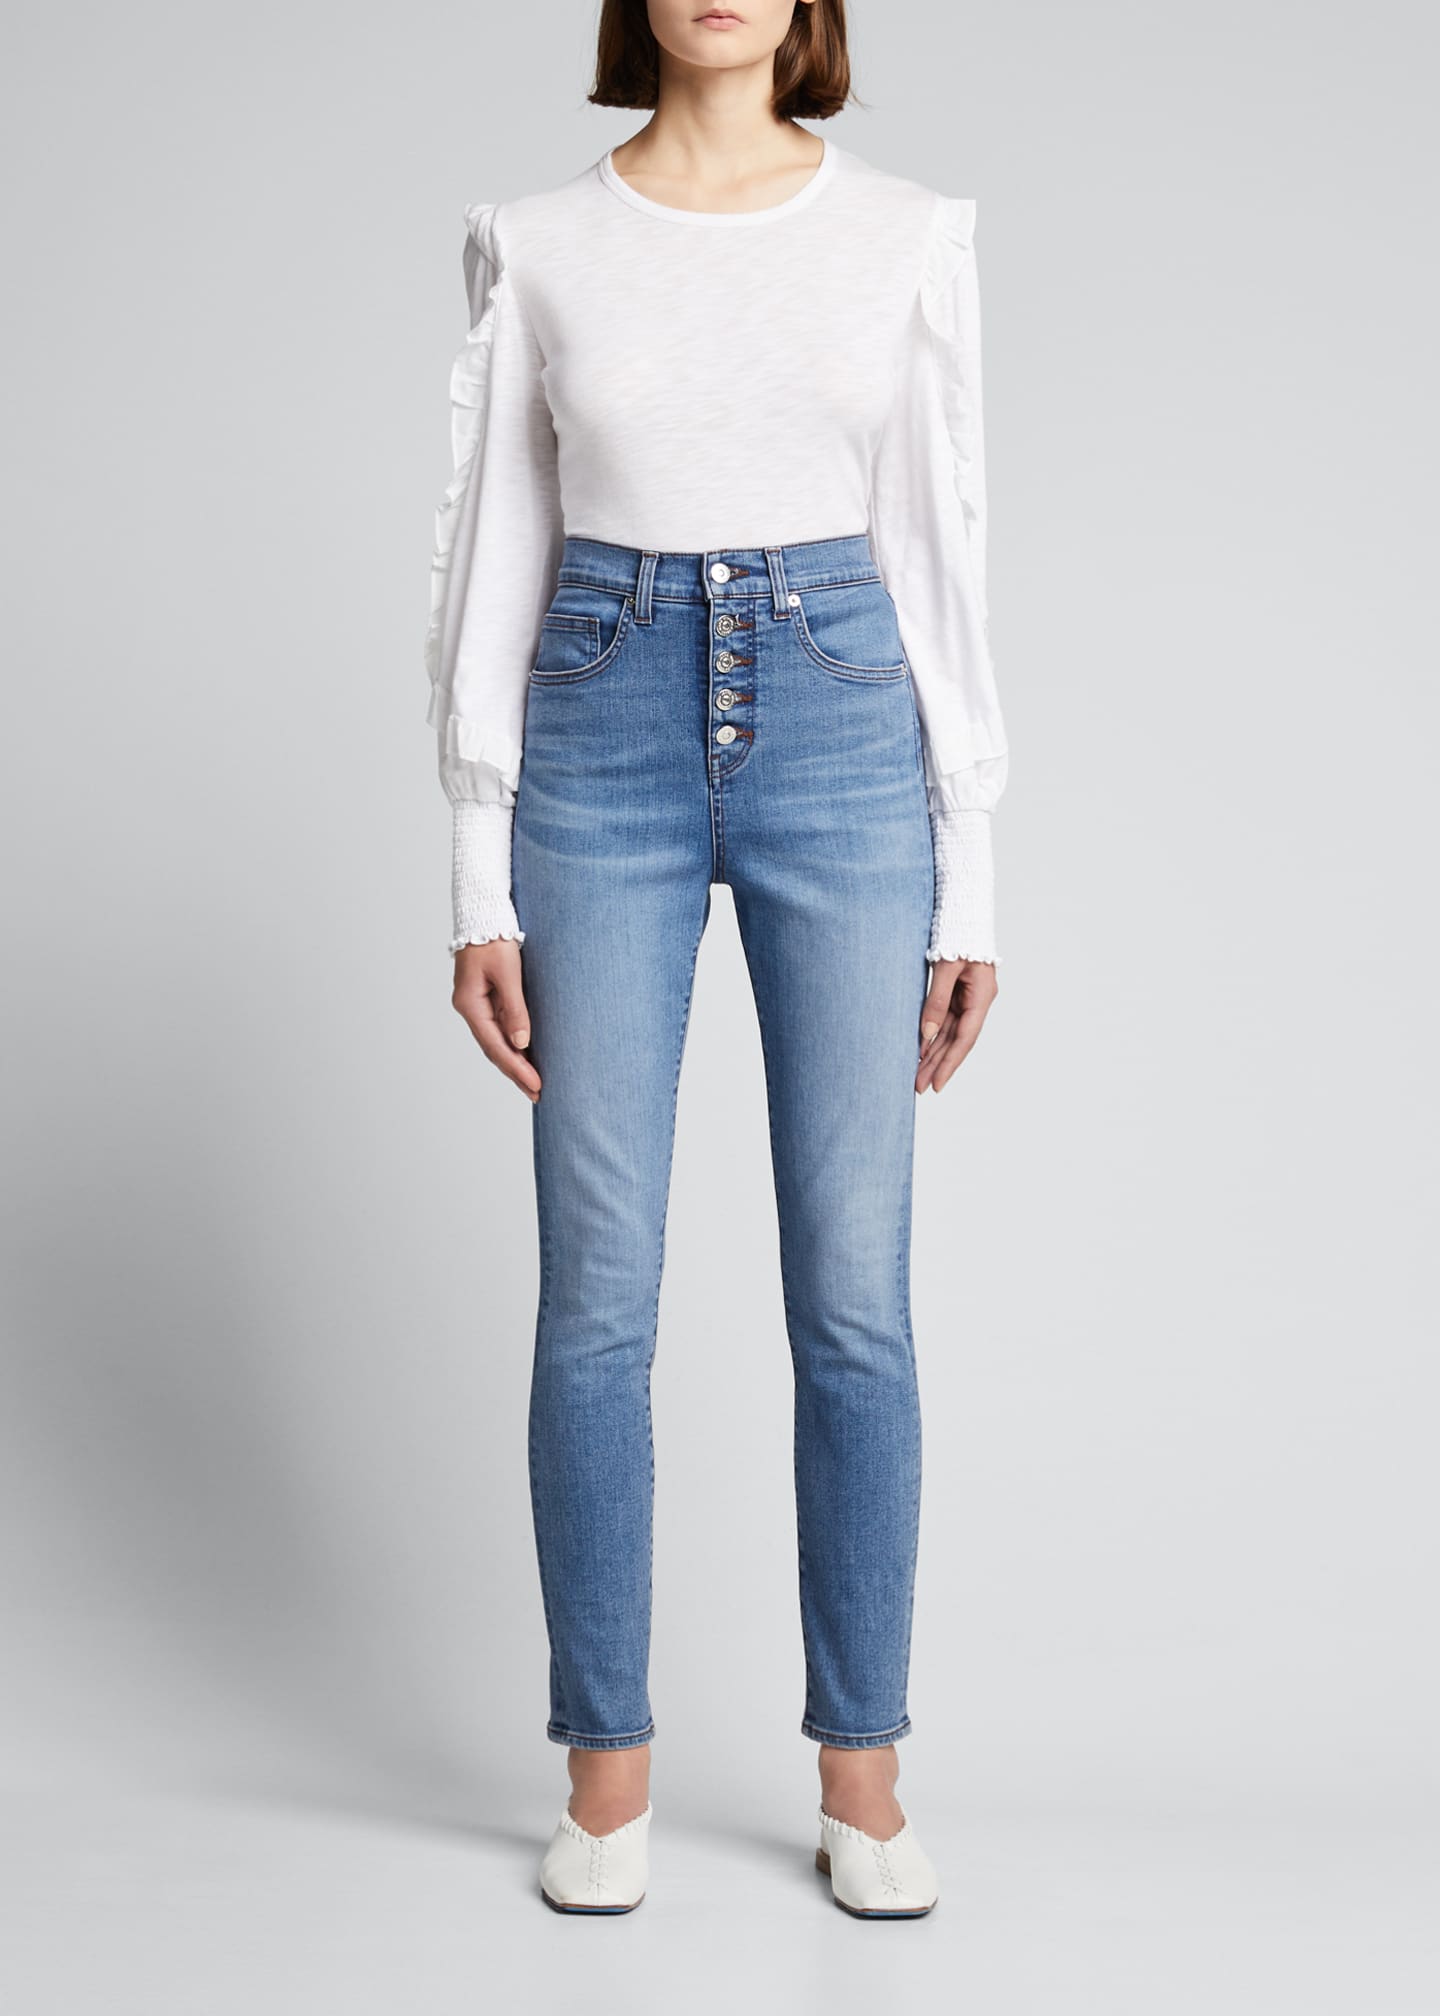 Veronica Beard Jeans Maera High-Rise Skinny Jeans | Bergdorf Goodman